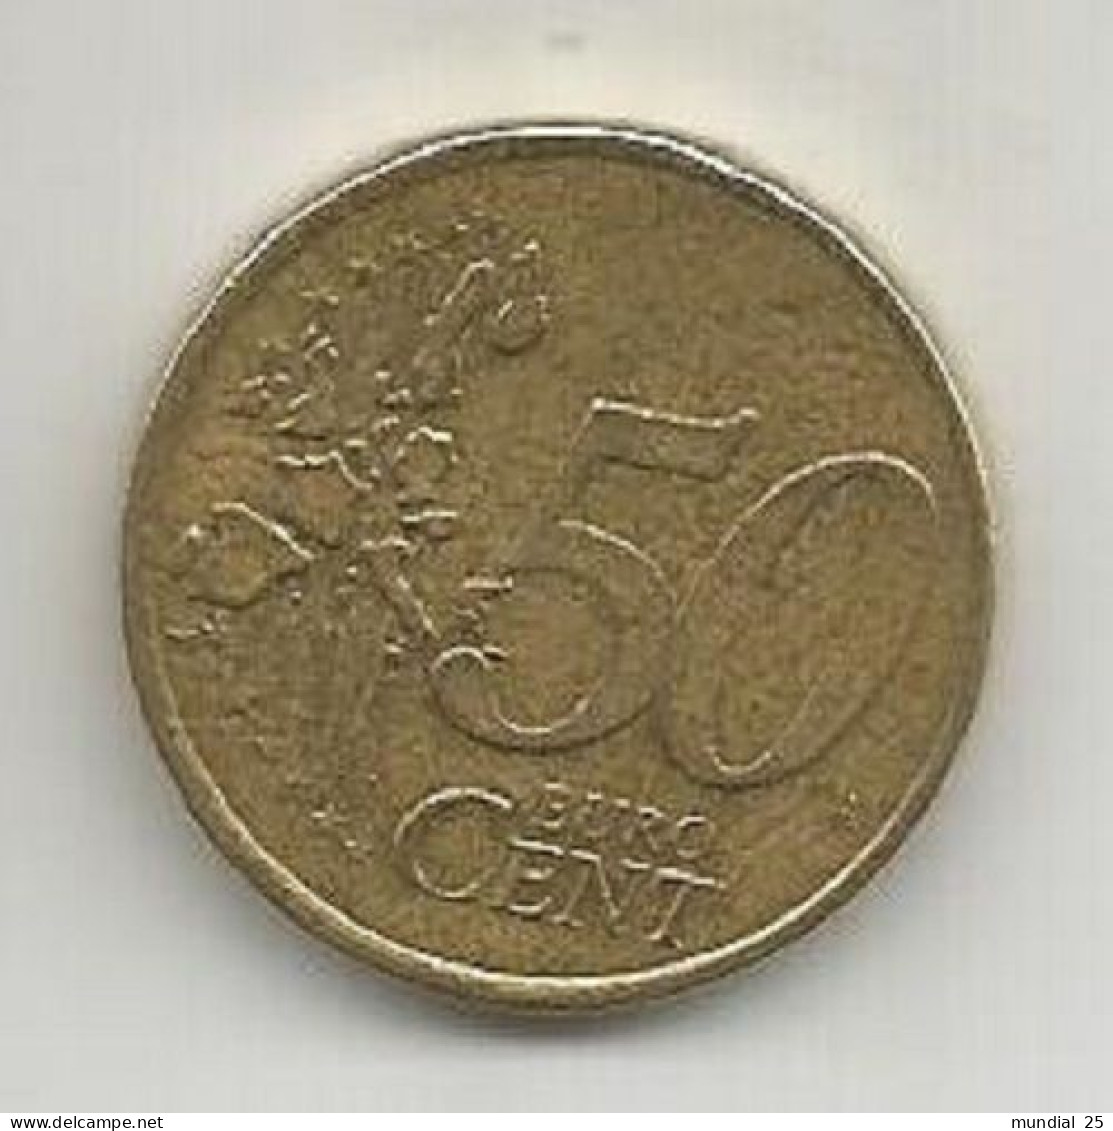 LUXEMBOURG 50 EURO CENT 2002 - Luxemburg